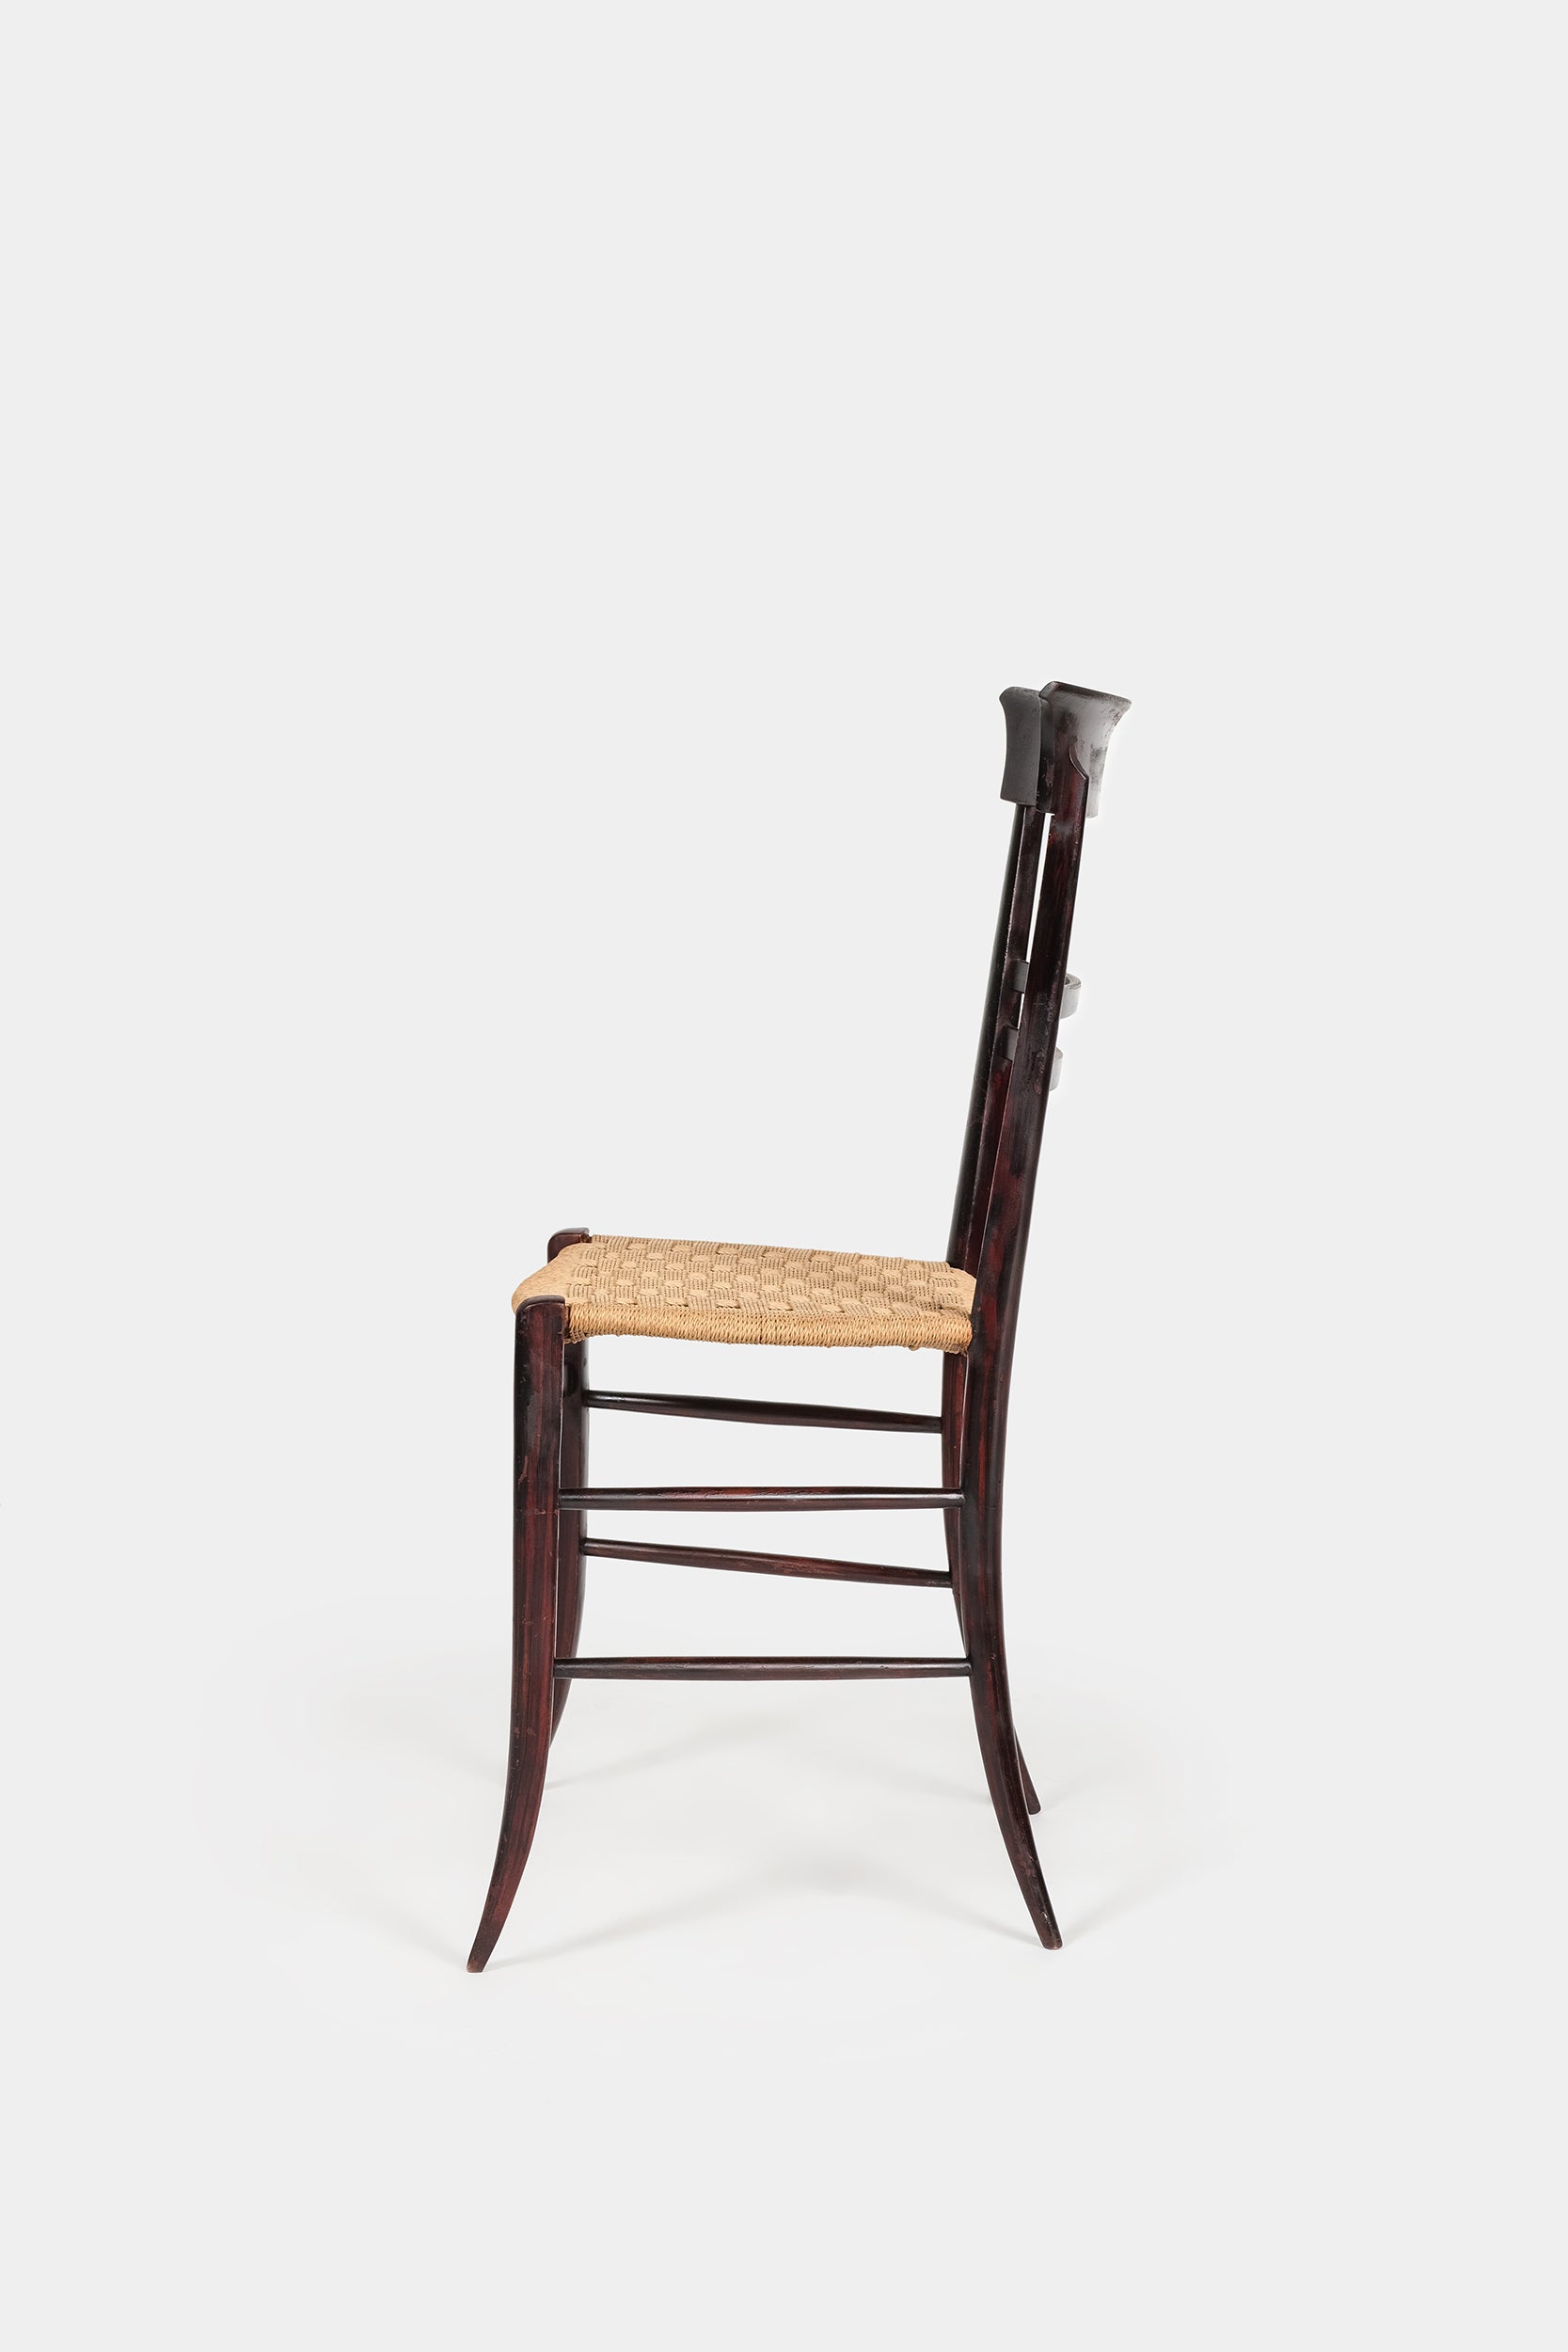 Giuseppe Gaetano Descalzi, Two Chairs, Chiavari, 40s